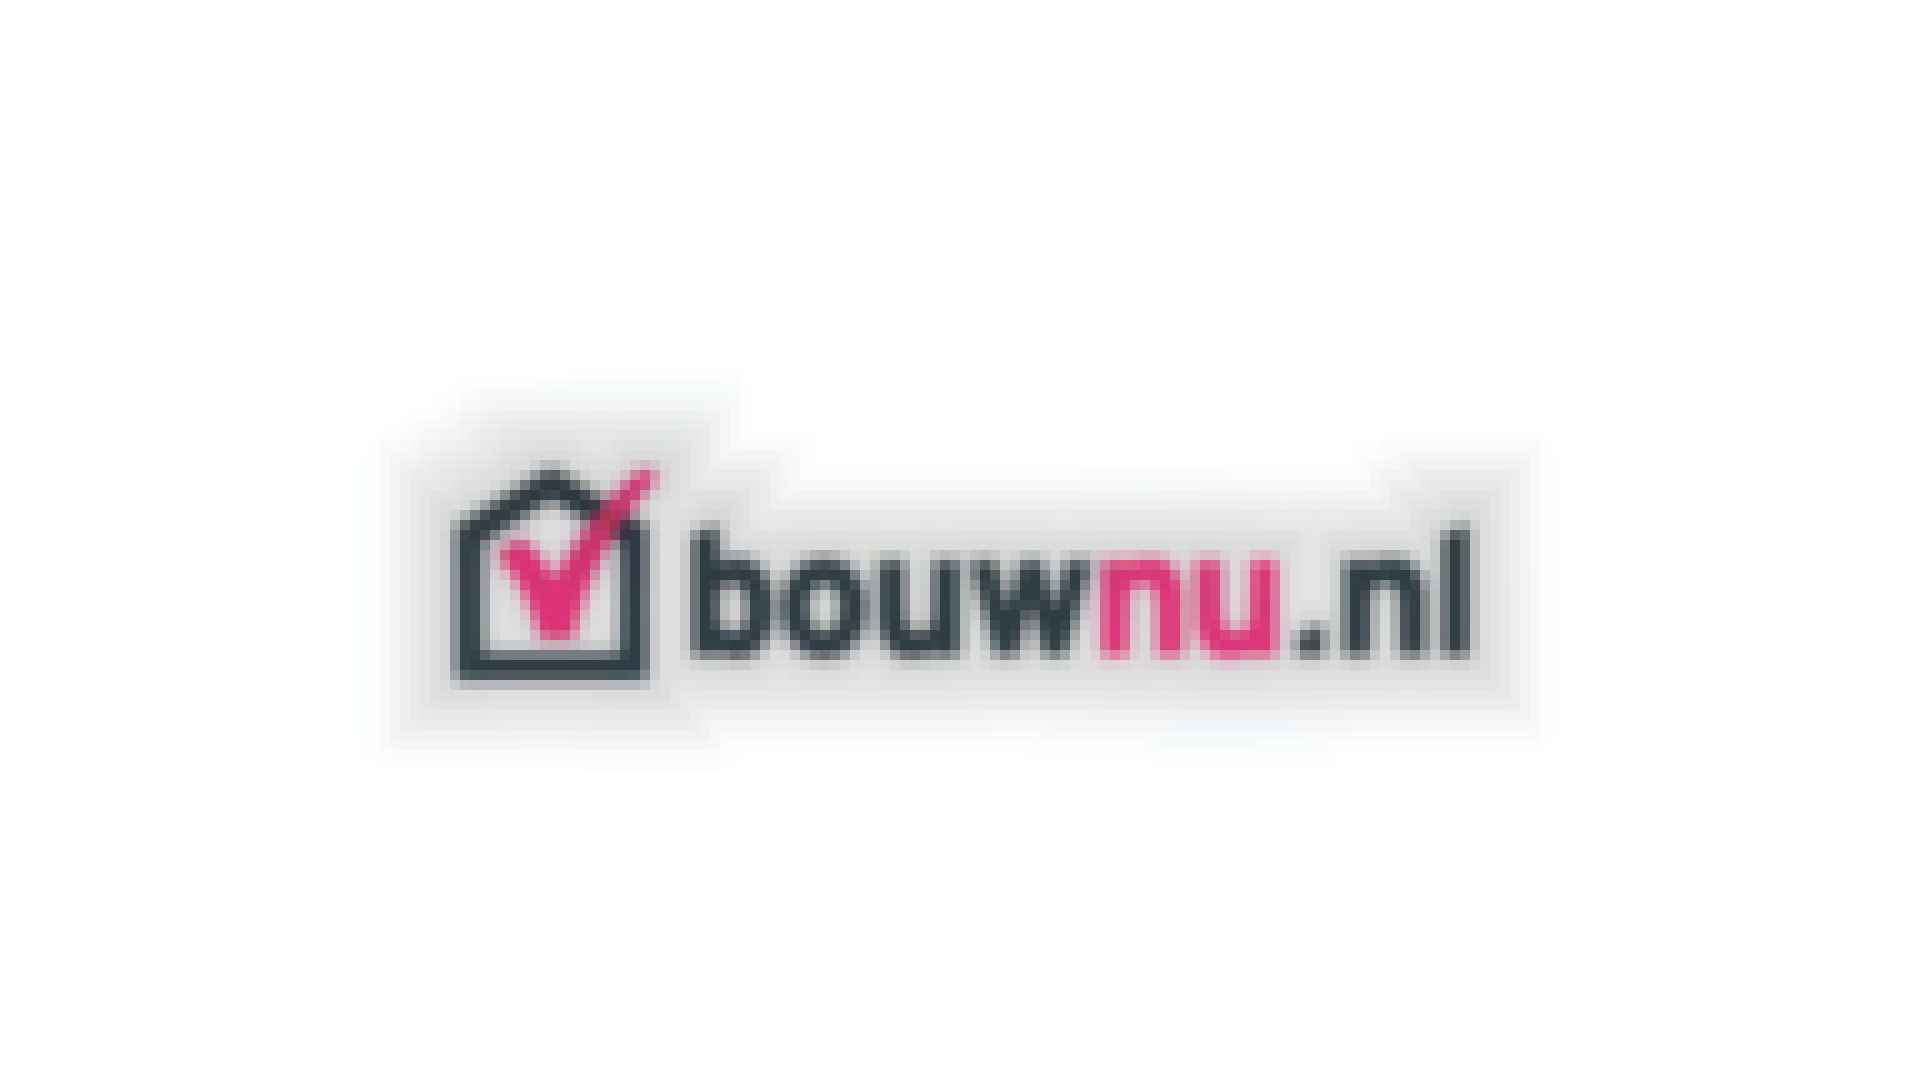 logo bouwnu.nl